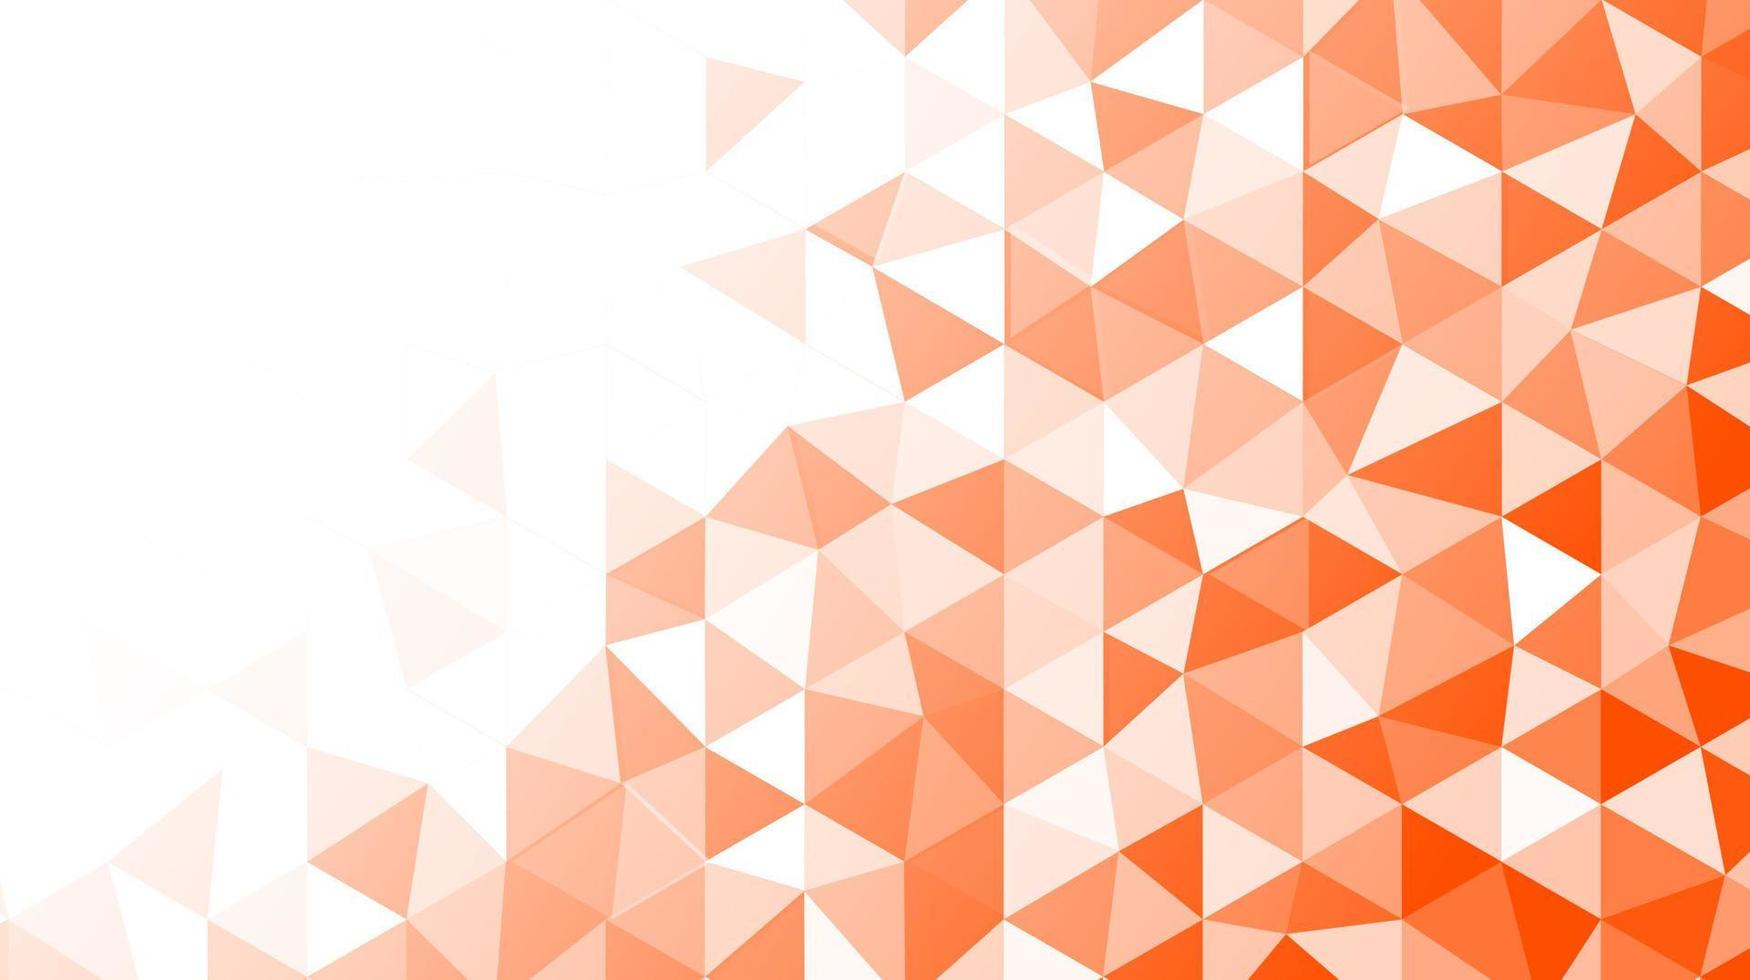 abstrakt orange geometrisk bakgrund med polygonala trianglar. vektor illustration design